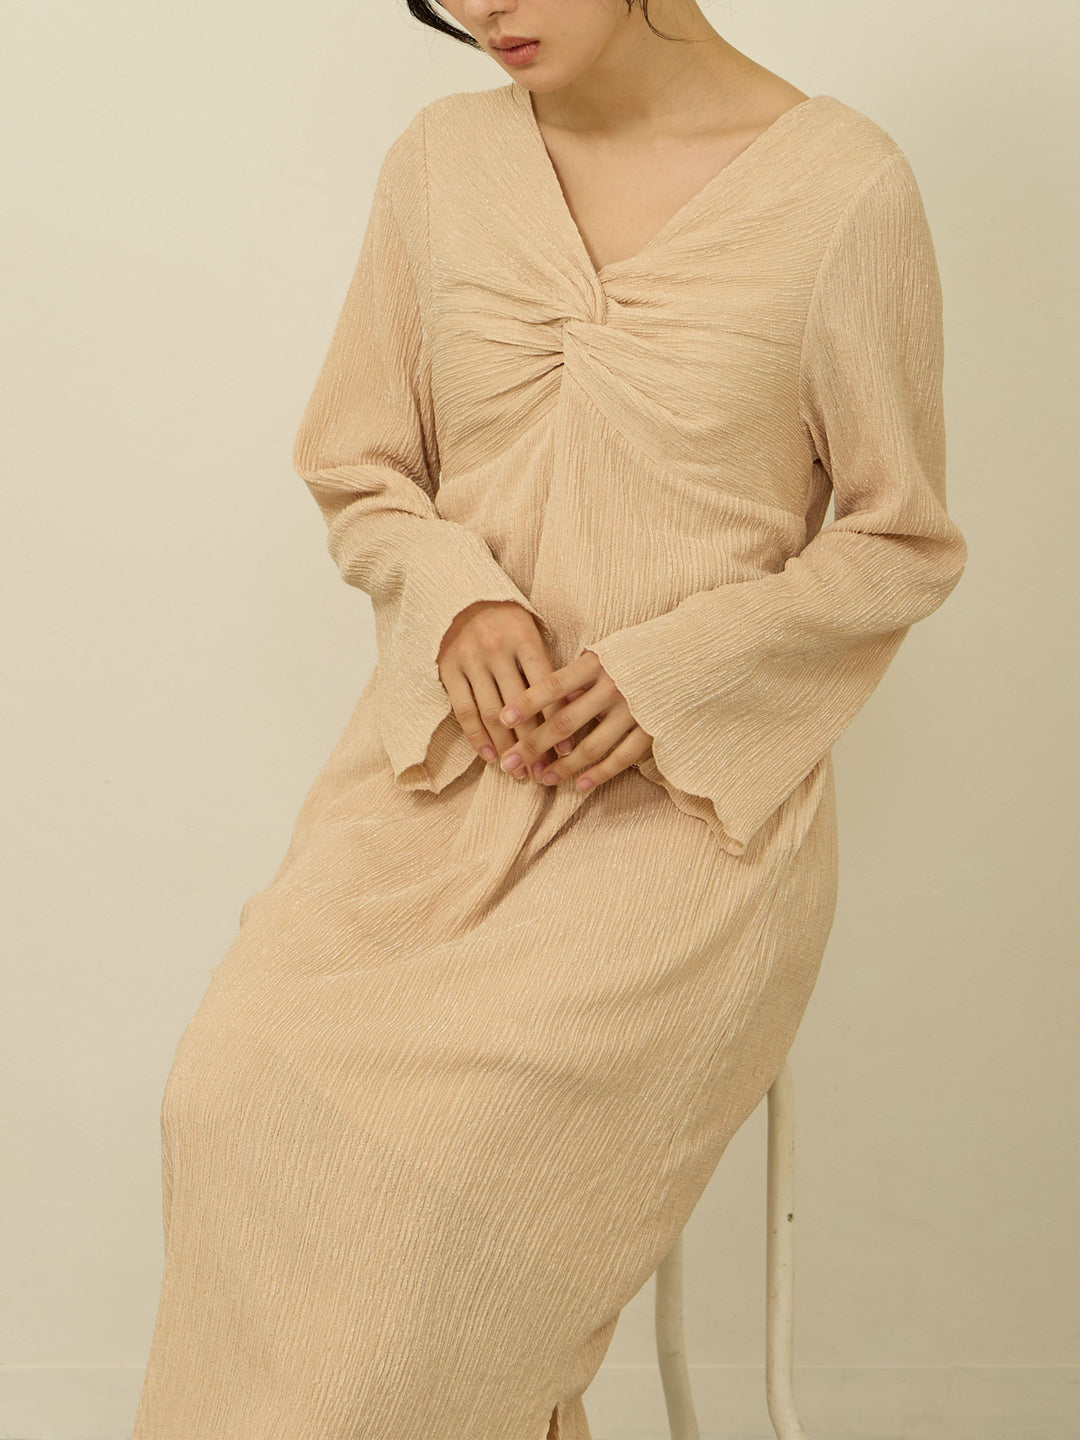 [Maternity/Nursing Clothes] Twist design dress Pink beige